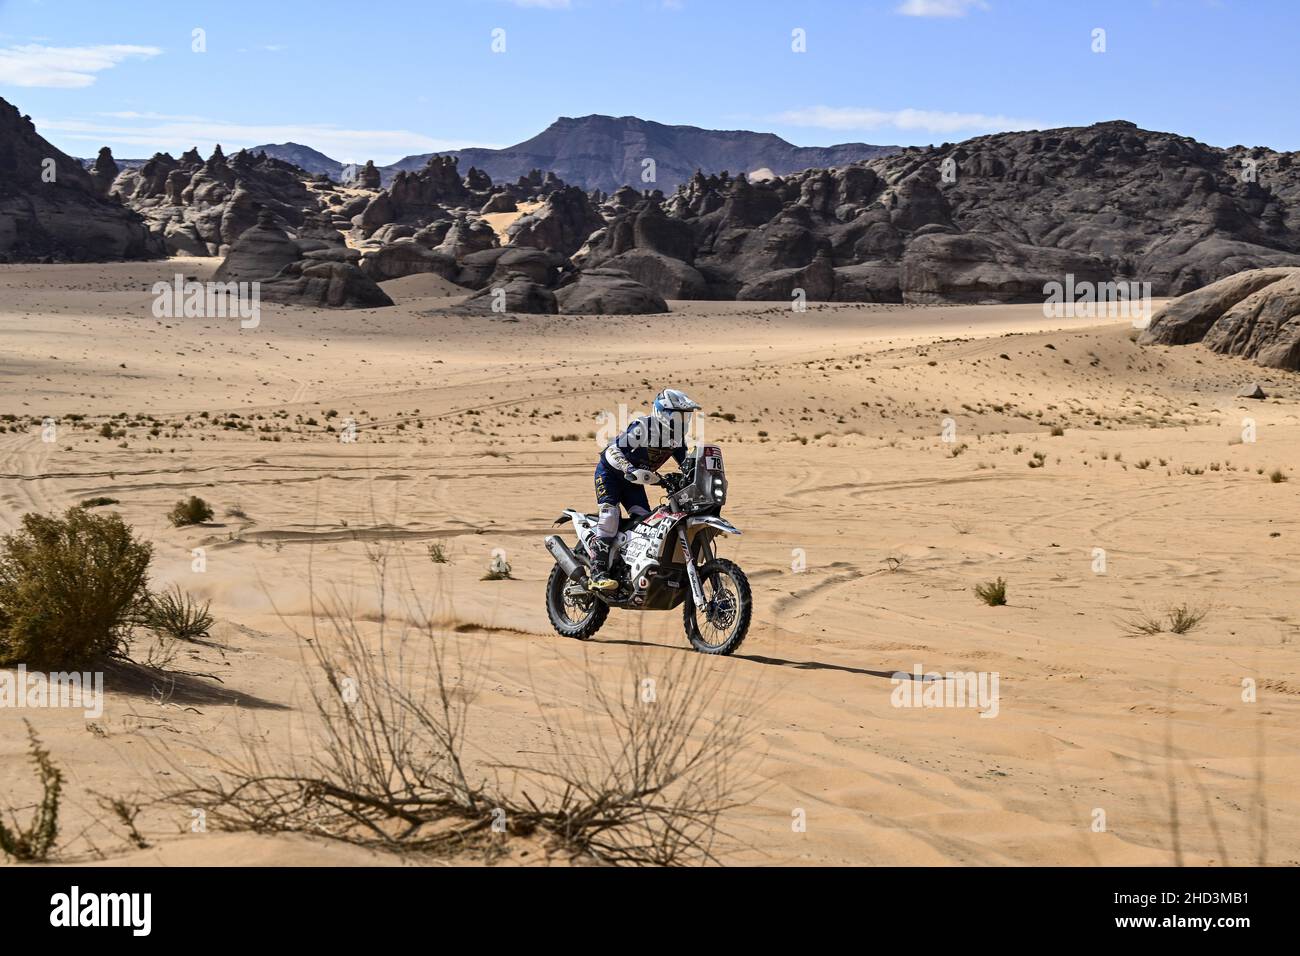 Rallye moto hi-res stock photography and images - Alamy